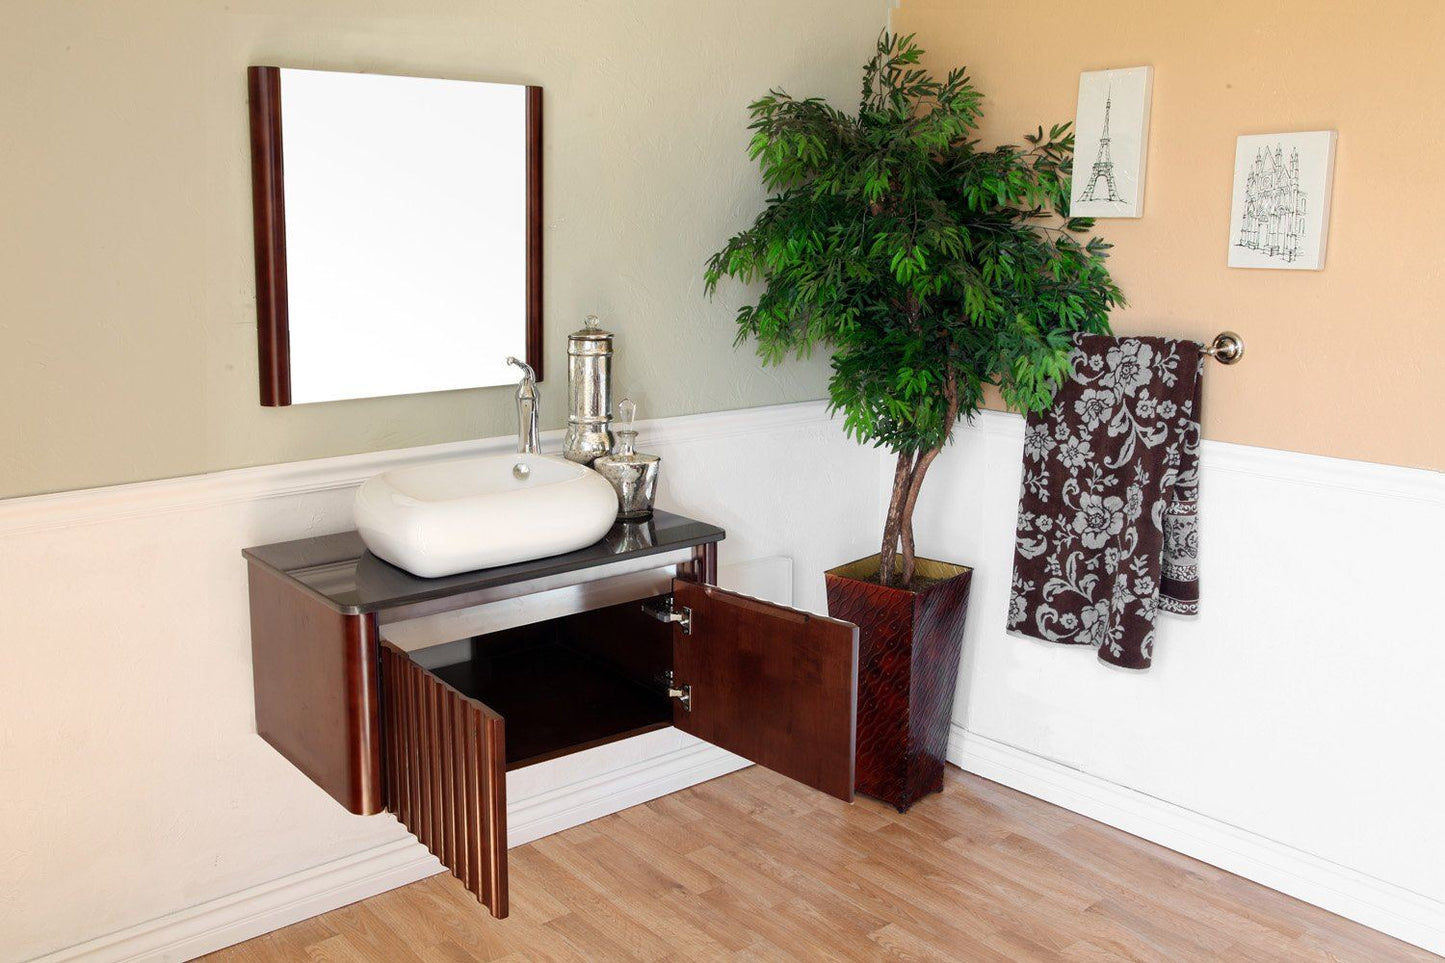 32.5" In Single Sink Vanity Wood Walnut - Luxe Bathroom Vanities